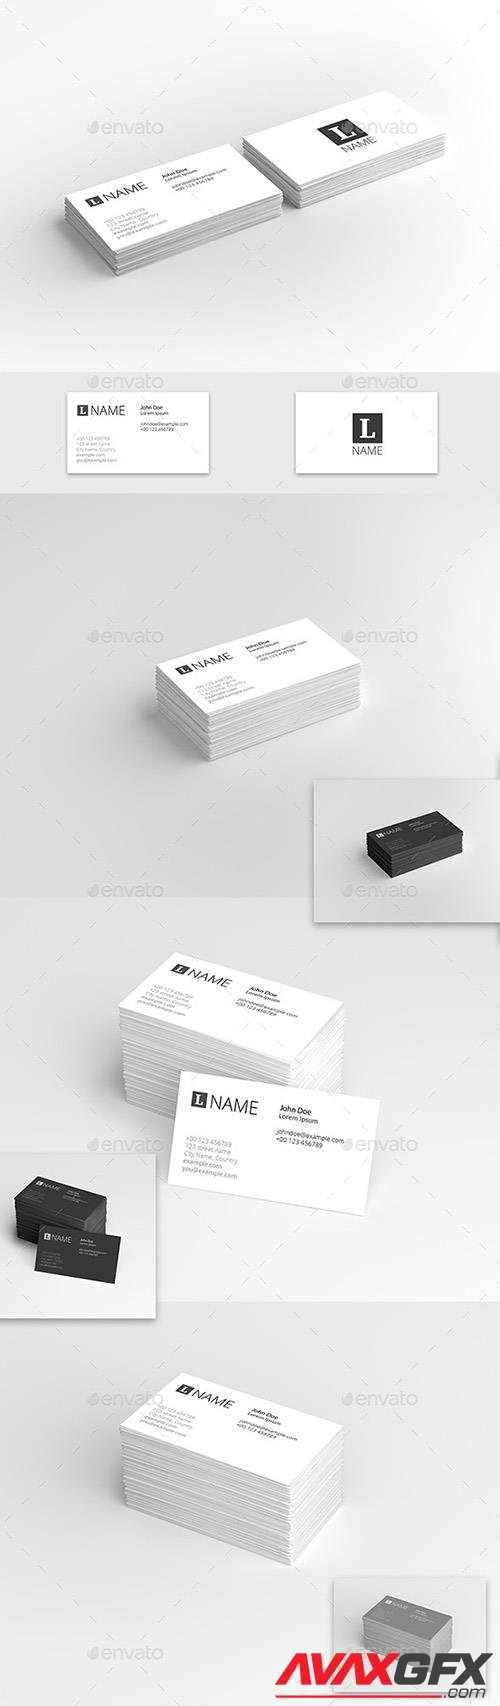 Graphicriver - Business Card Presentation Template 22031191